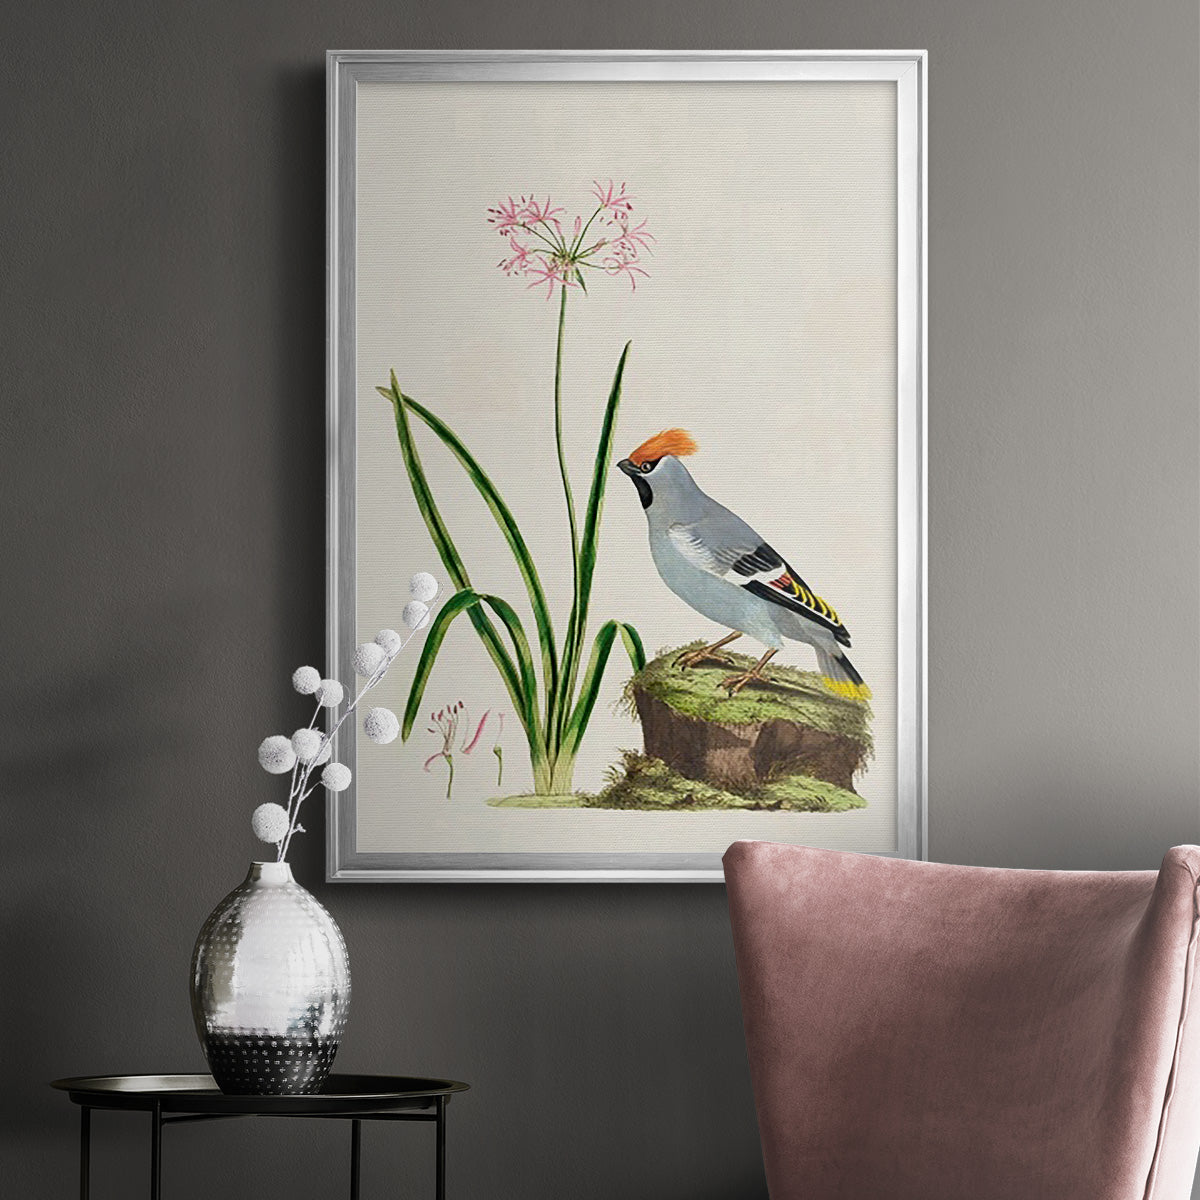 Bird in Habitat II Premium Framed Print - Ready to Hang